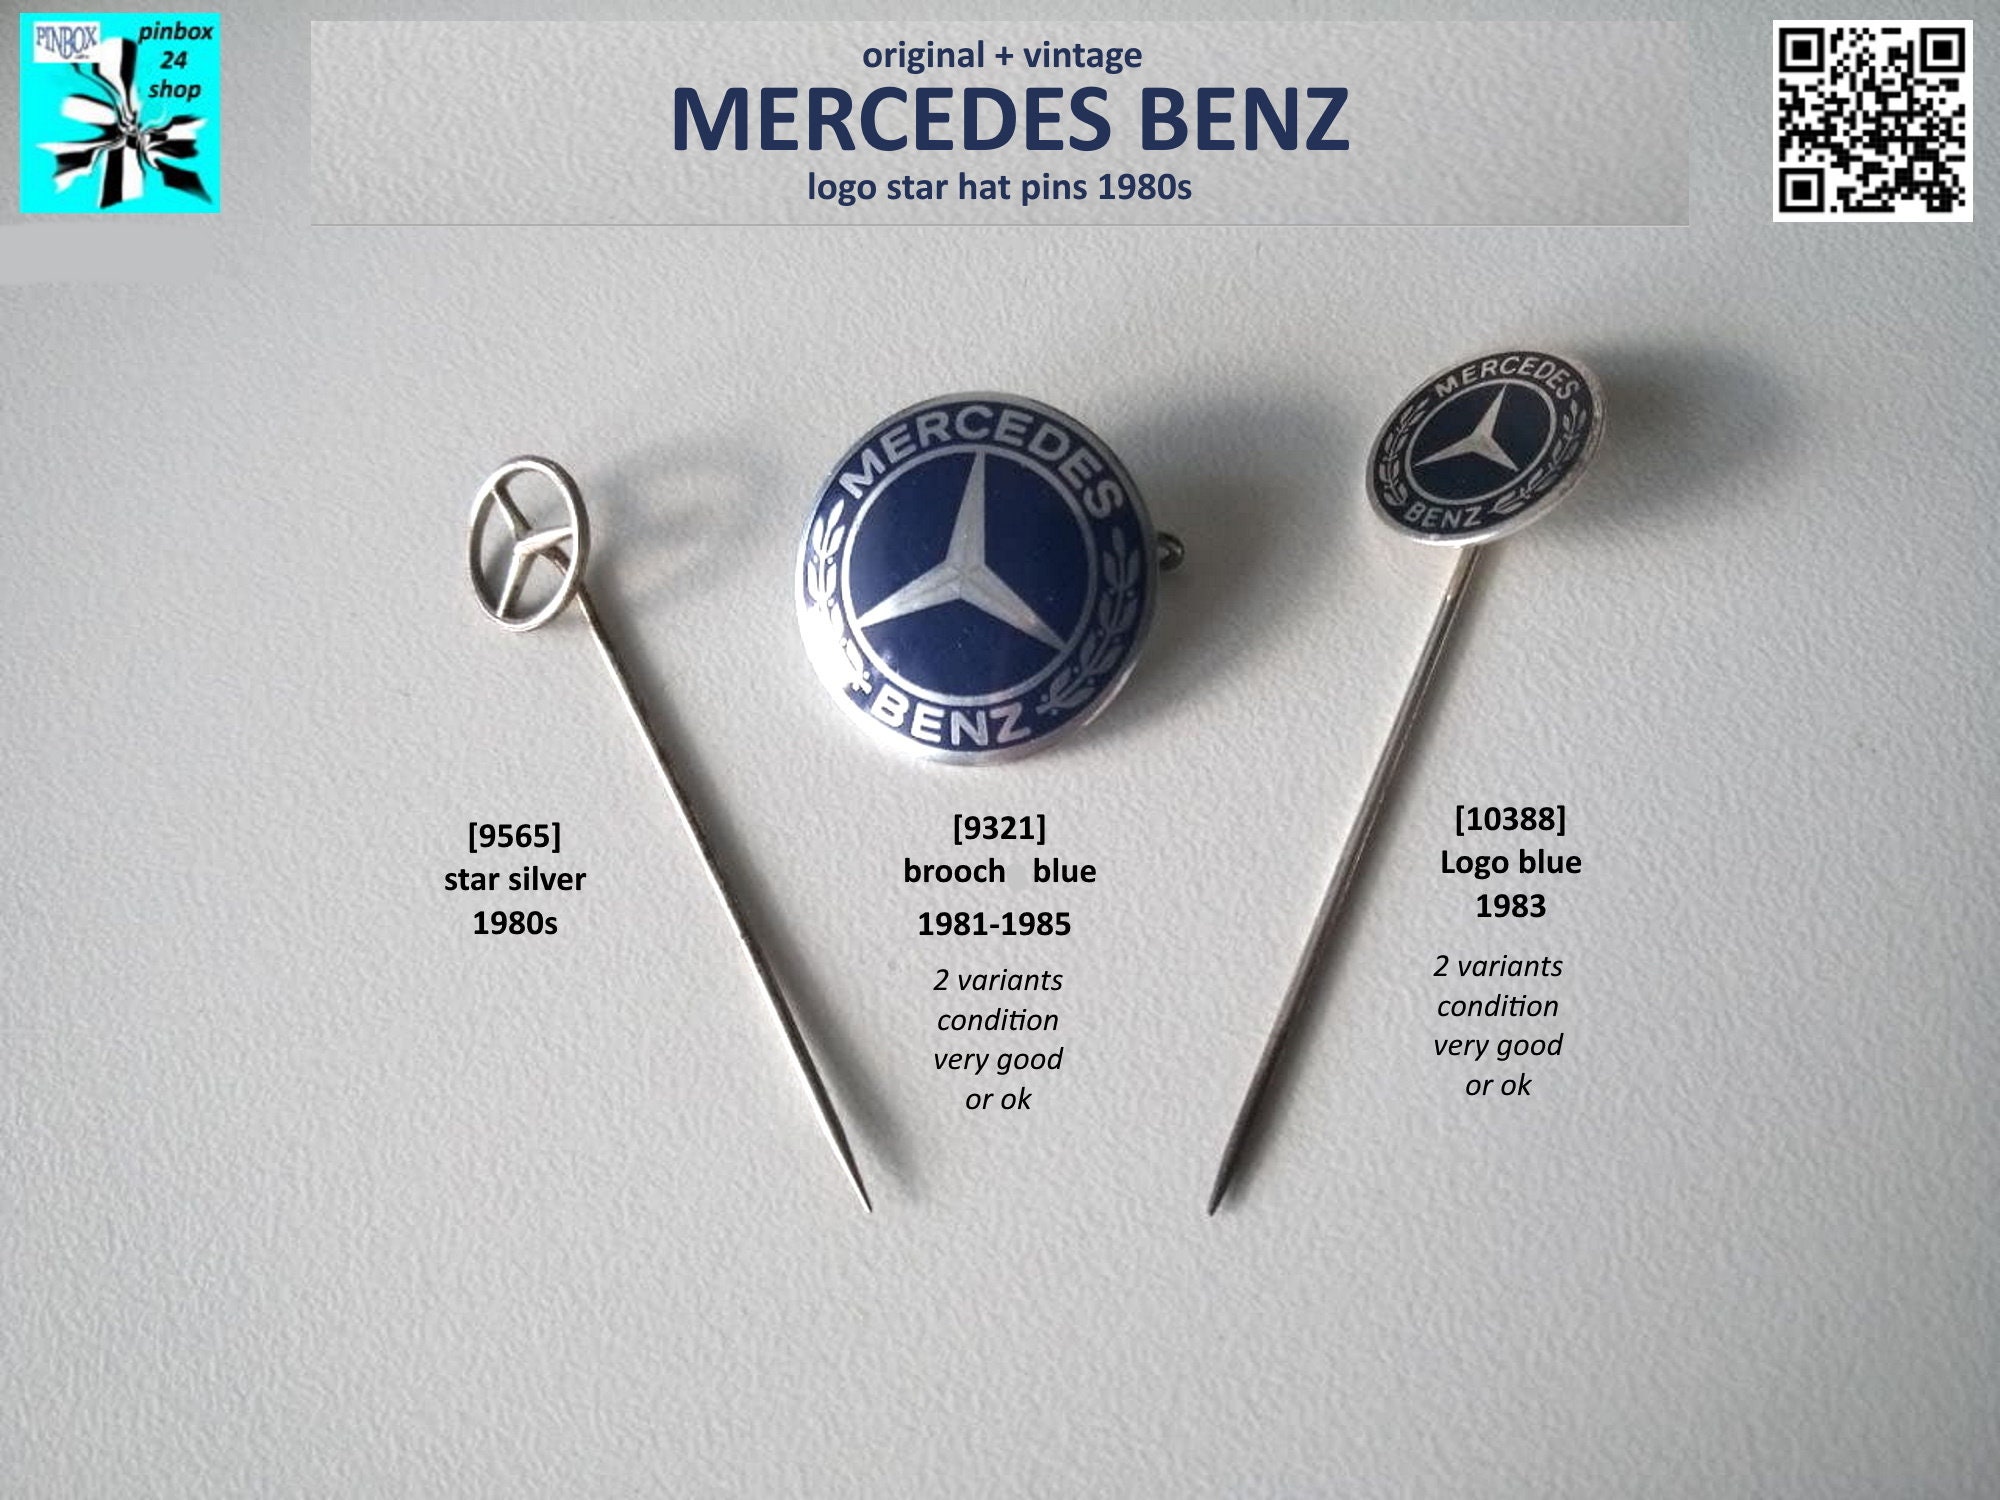 Benz Accessories - Etsy